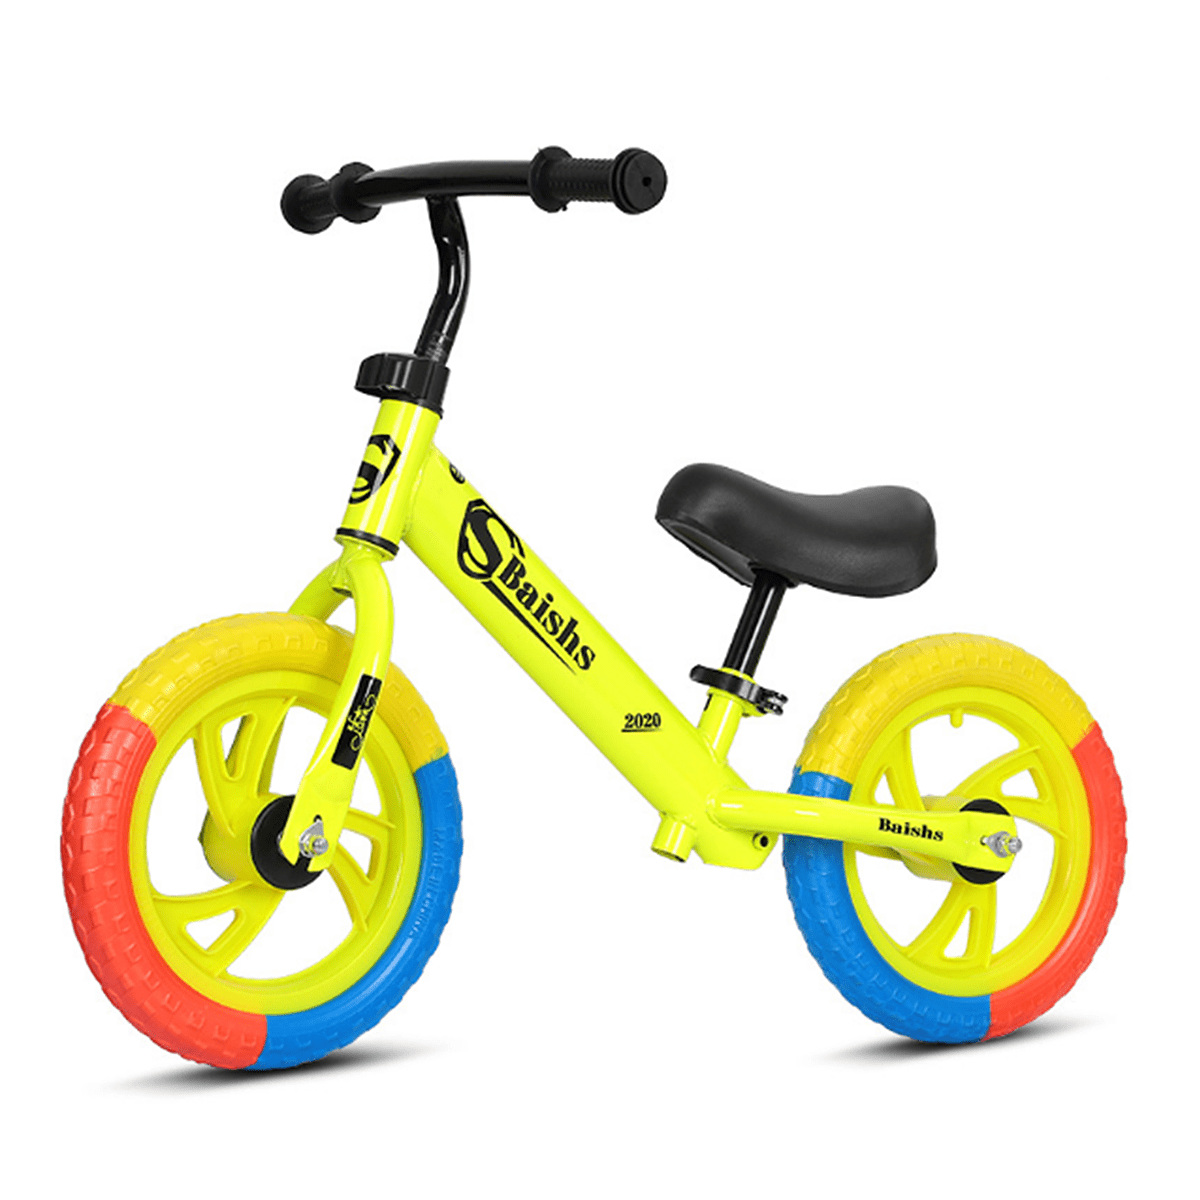 Yosoo 12inch Wheel Kids Sport Balance Bike Pre-Schooler Bike No-Pedal Carbon Steel Frame Training Walking Bicycle 